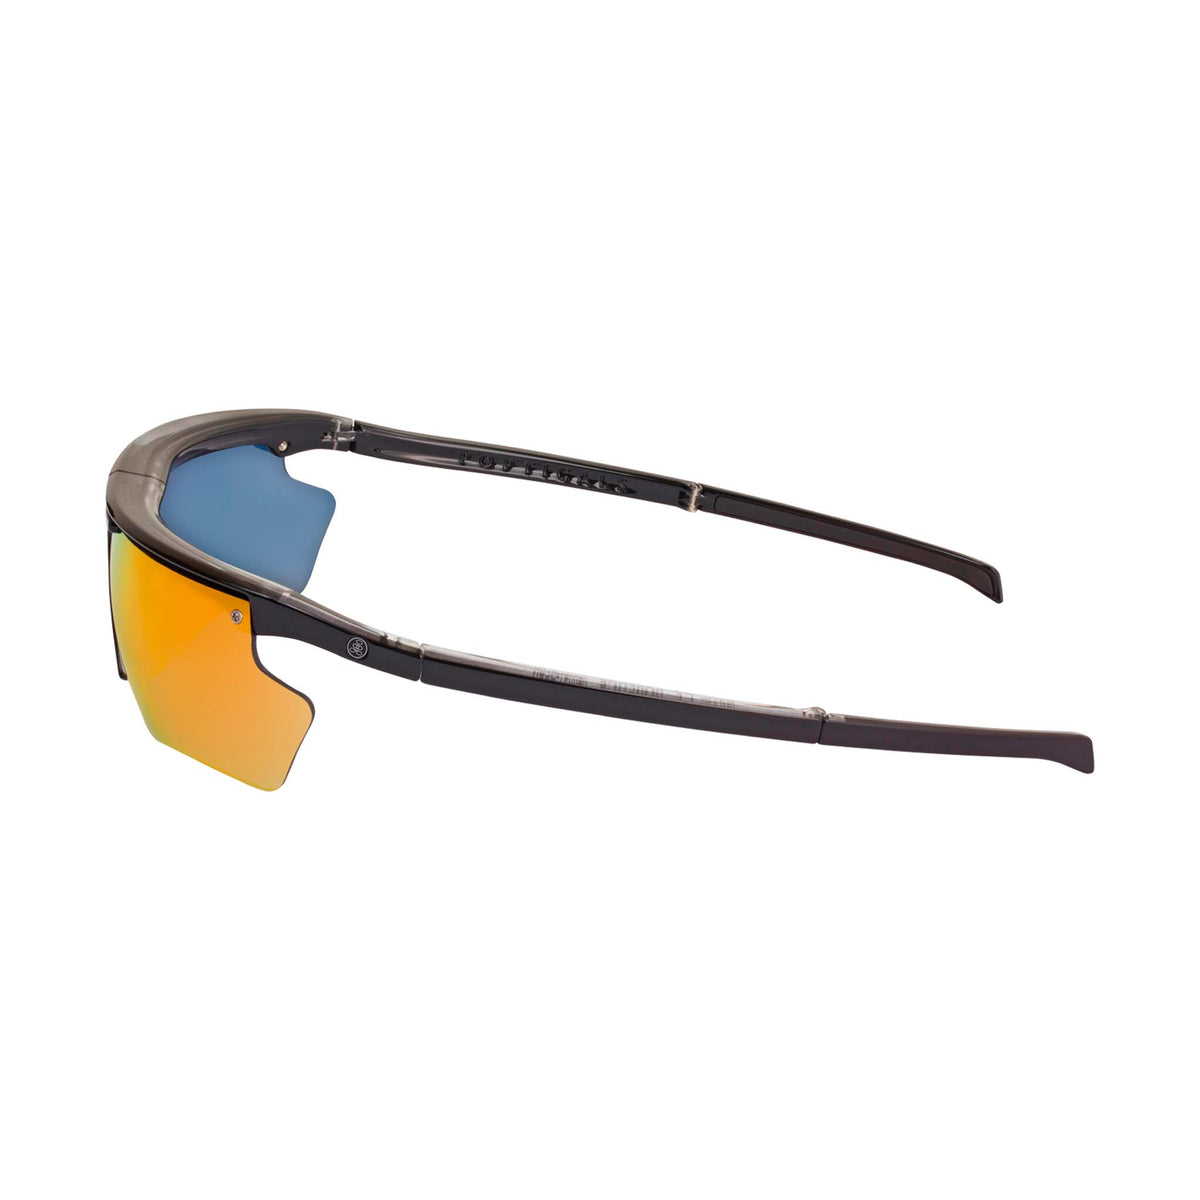 Popticals, Premium Compact Sunglasses, PopEdge, 040091-BLON, Polarized Sunglasses, Gloss Black over Crystal Frame, Gray Lenses with Orange Mirror Finish, Side View